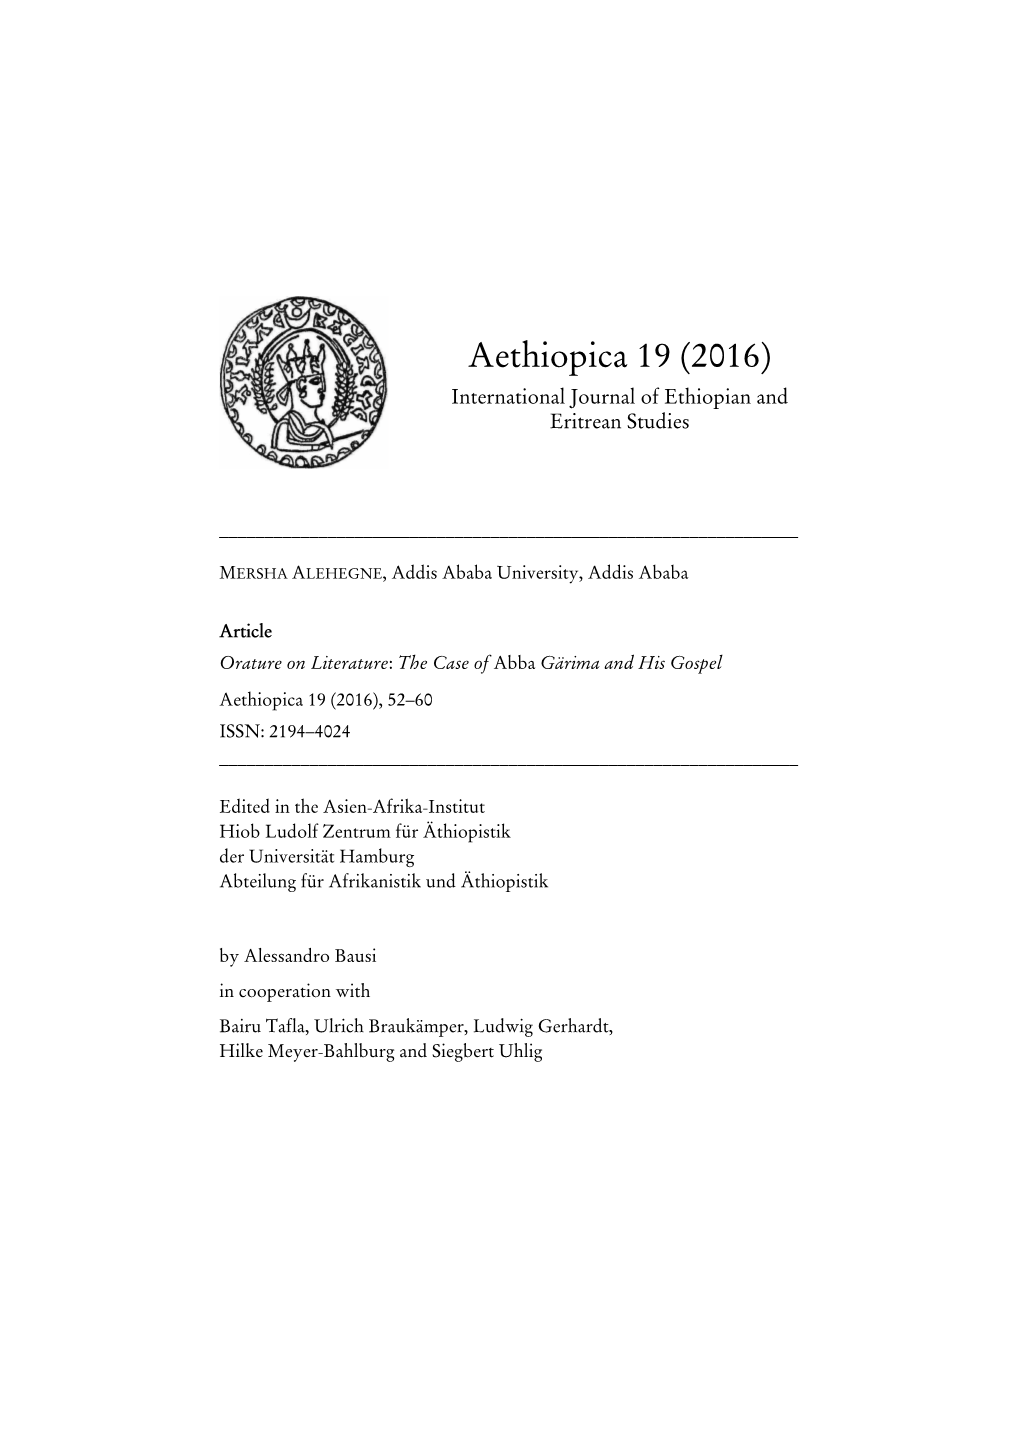 Aethiopica 19 (2016) International Journal of Ethiopian and Eritrean Studies